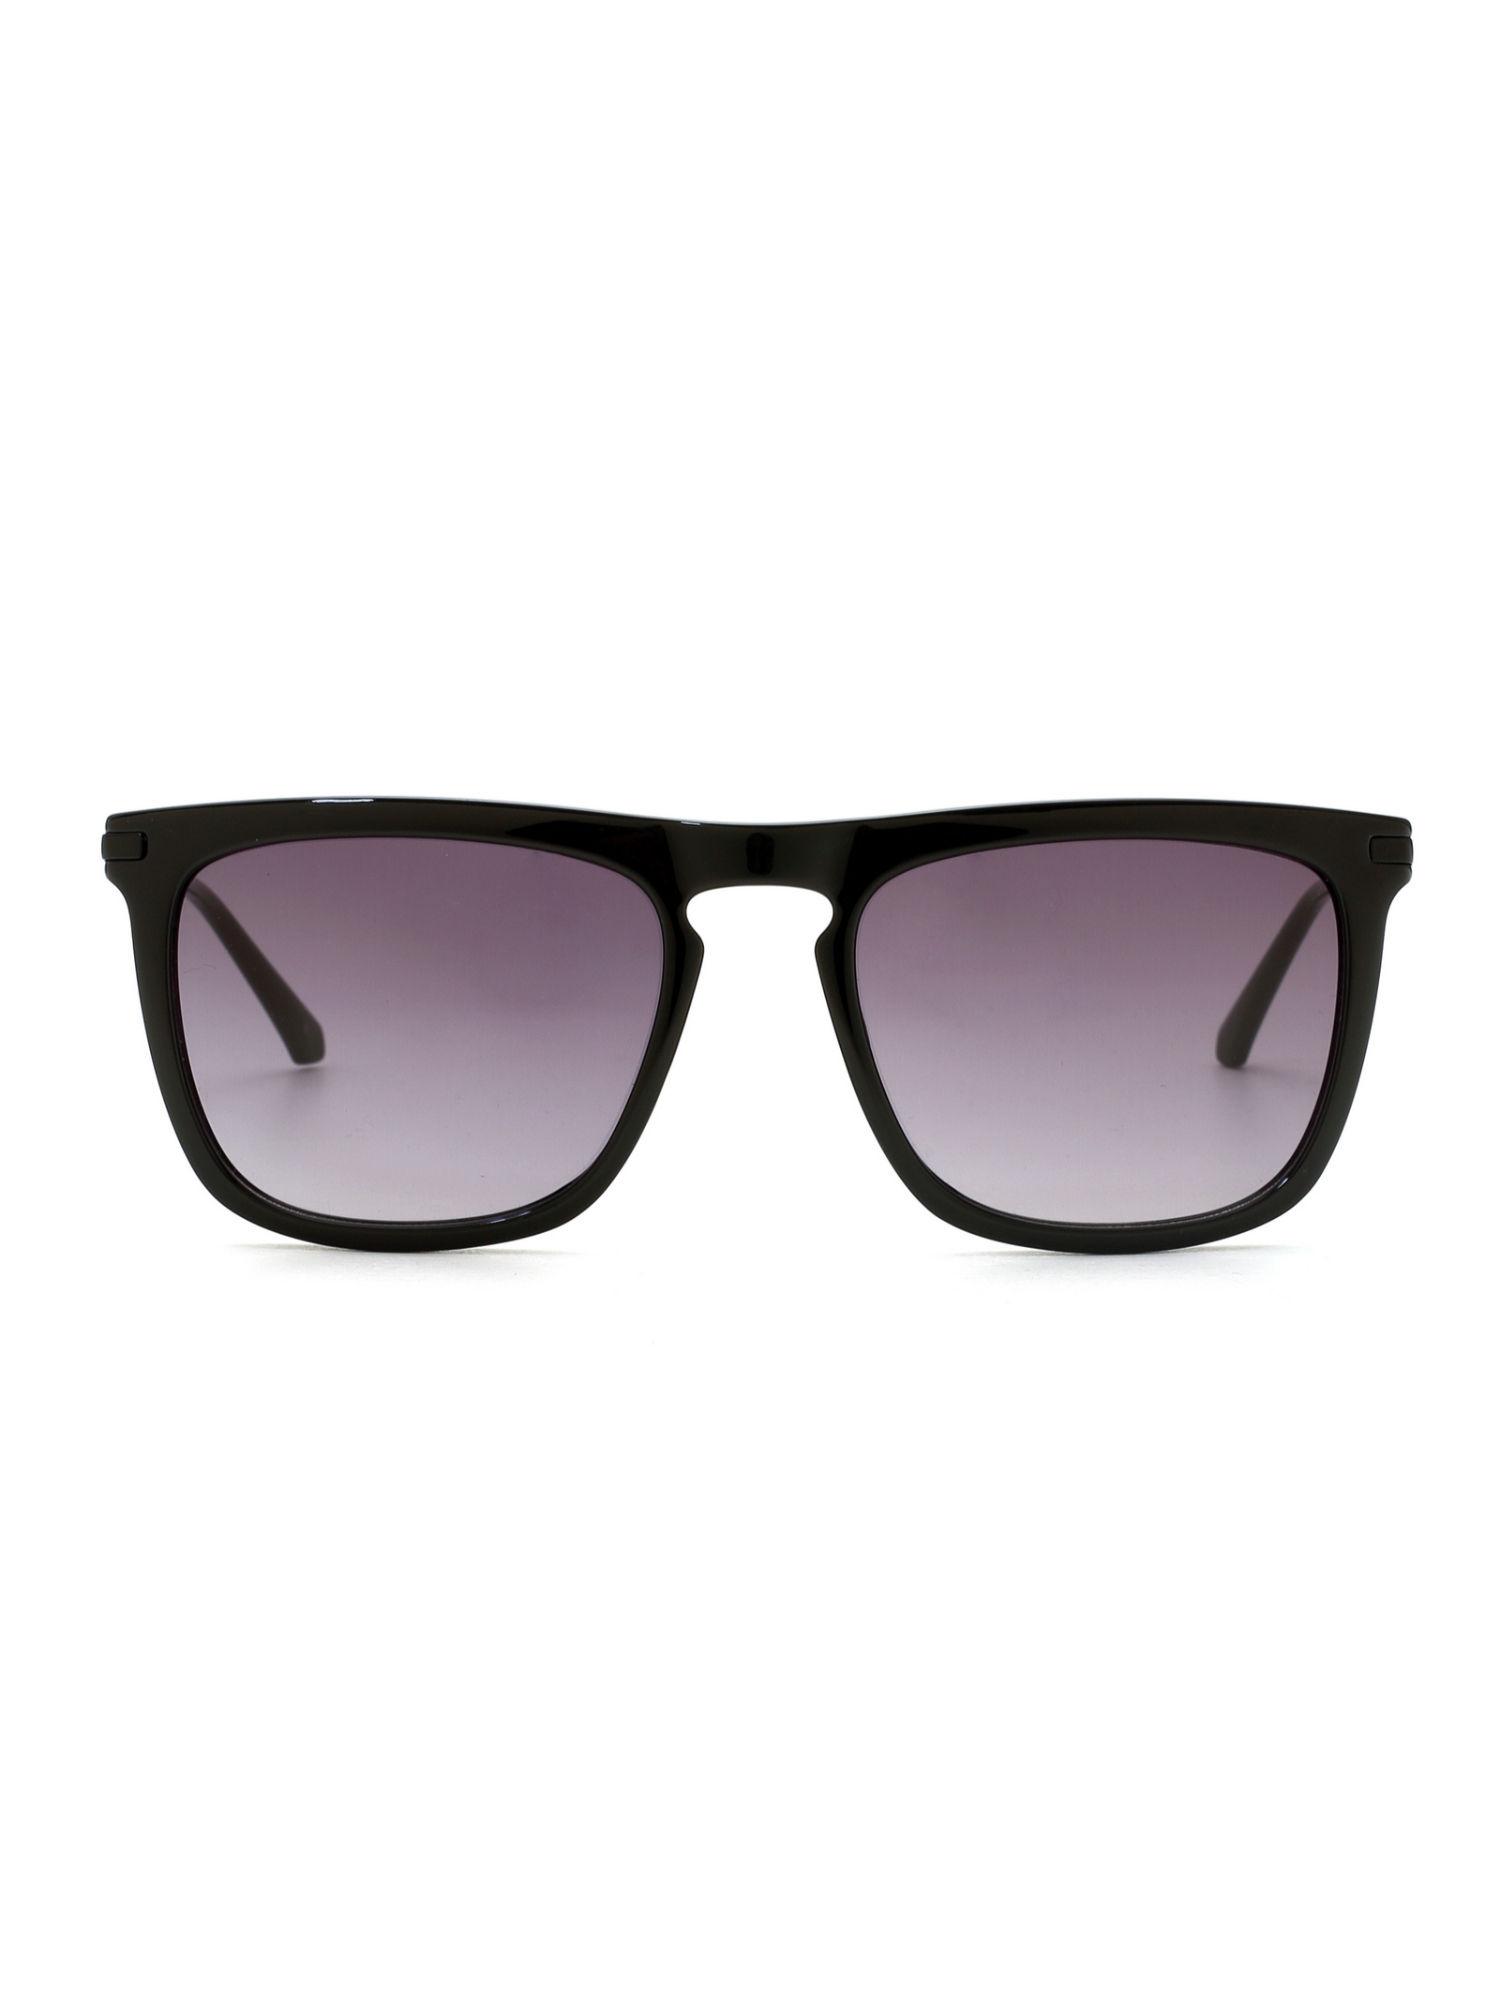 square sunglasses with purple lens for men